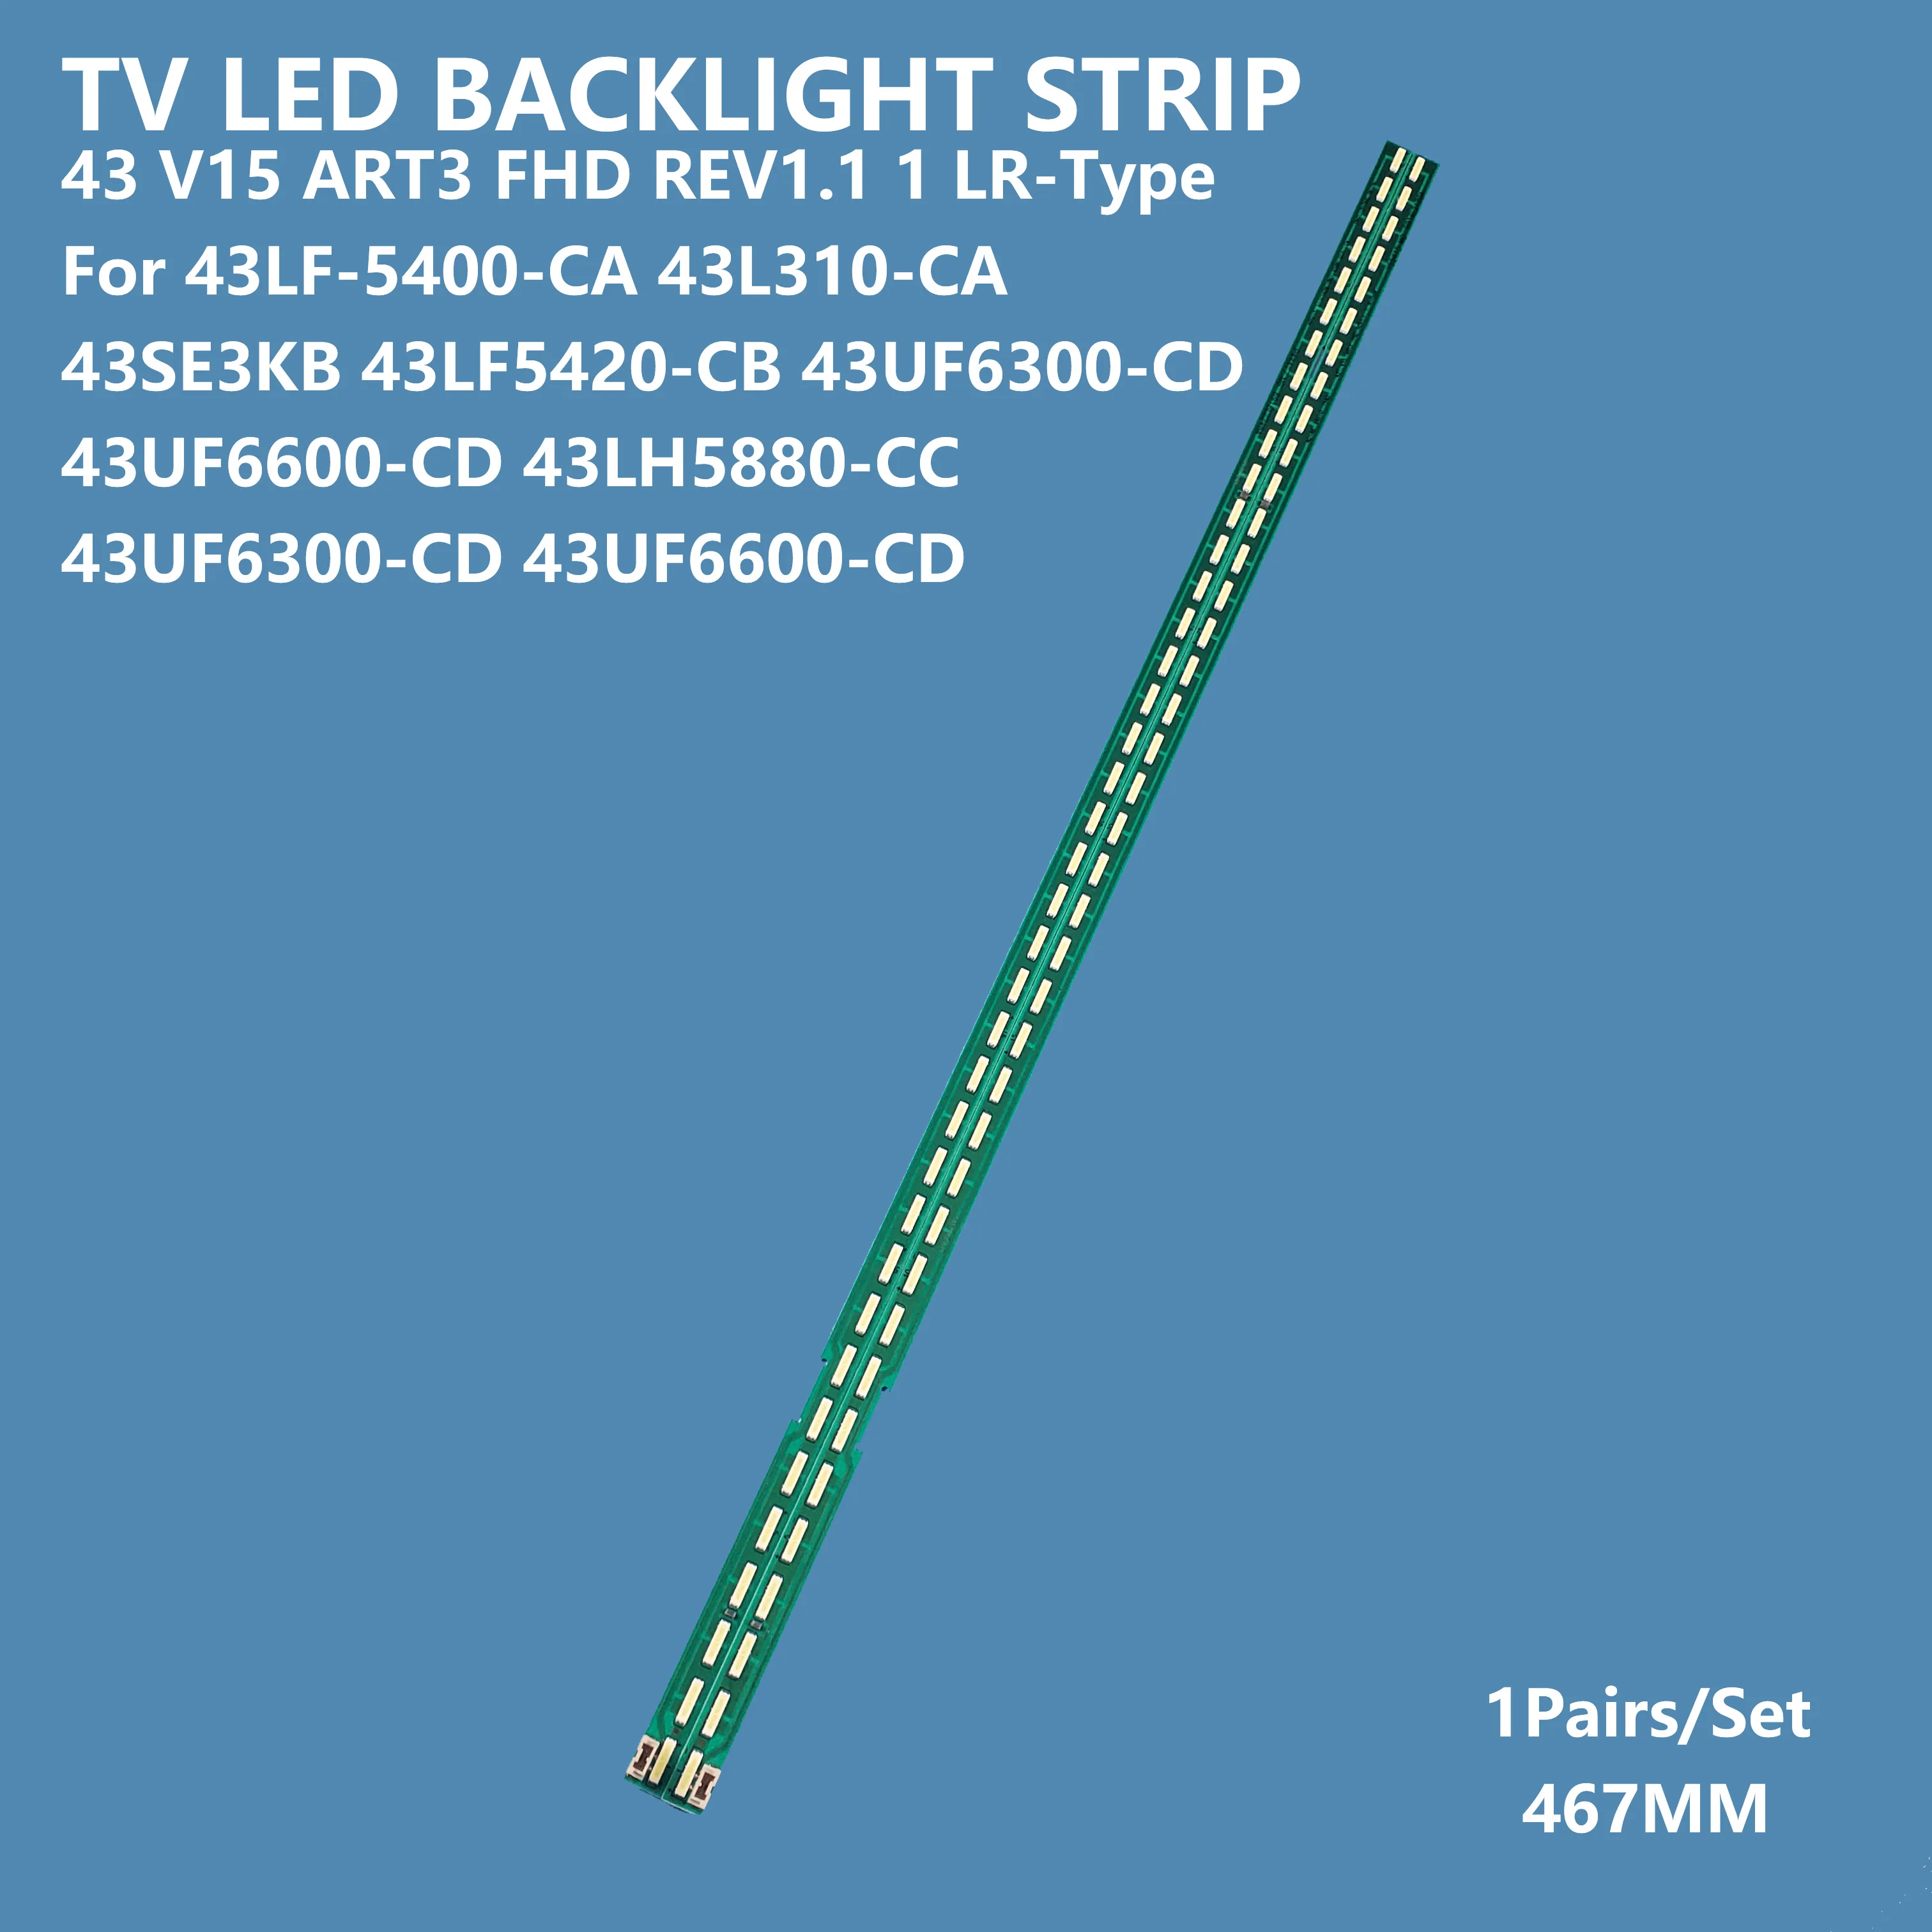 2Pcs/set TV LED Backlight Strip 43 V15 ART3 FHD REV1.1 1 LR-Type Bar Light for LG 43inch 43LX310C-CA 43LF-5400-CA 43SE3KB Repair